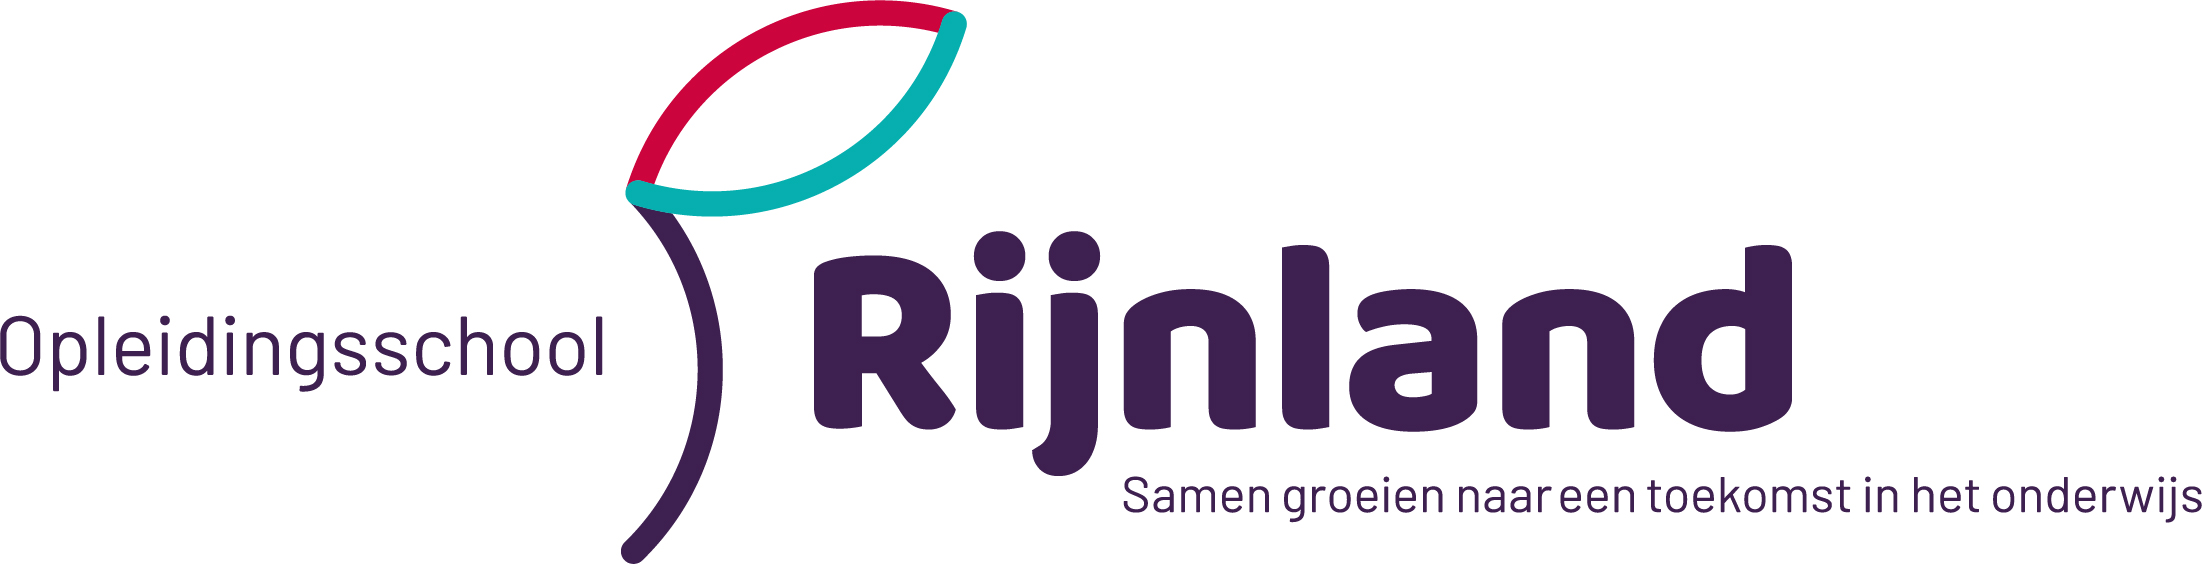 Logo: Opleidingsschool Rijnland